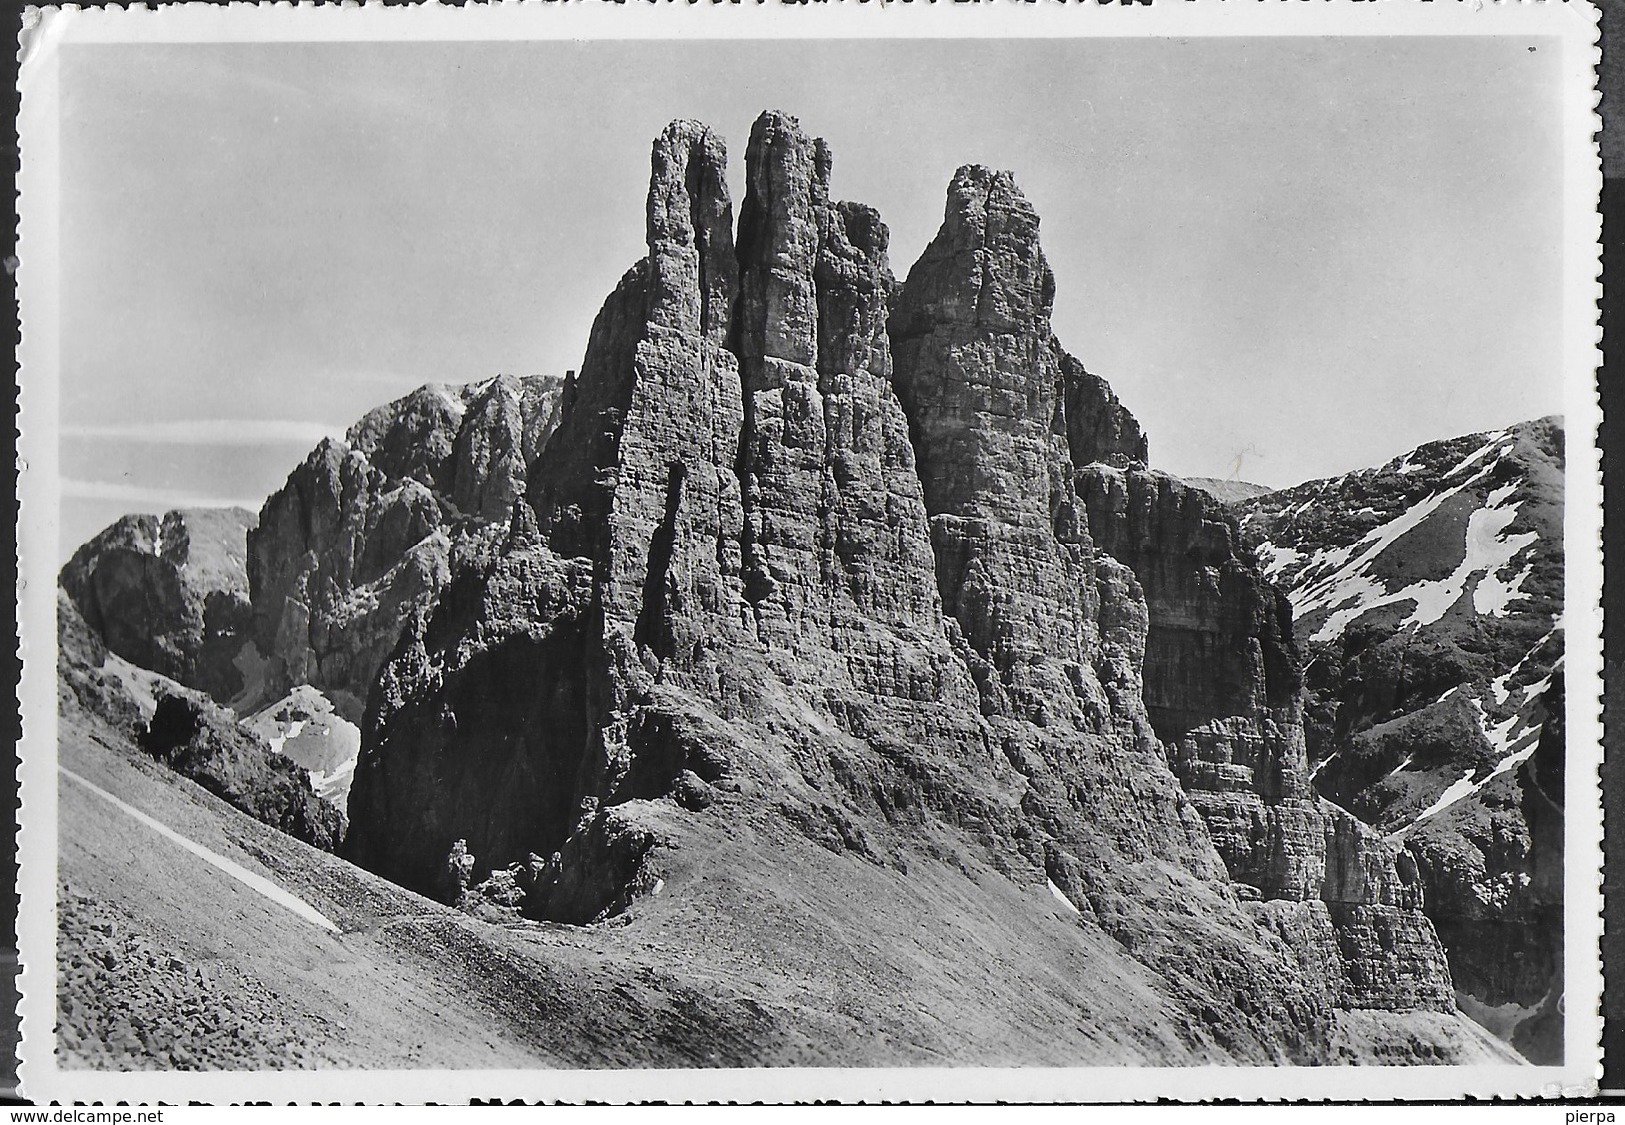 DOLOMITI - TORRI DEL VAJOLET - EDIZ. SCILARIA - VIAGGIATA DA VIGO DI FASSA 06.07.1956 - Alpinismo